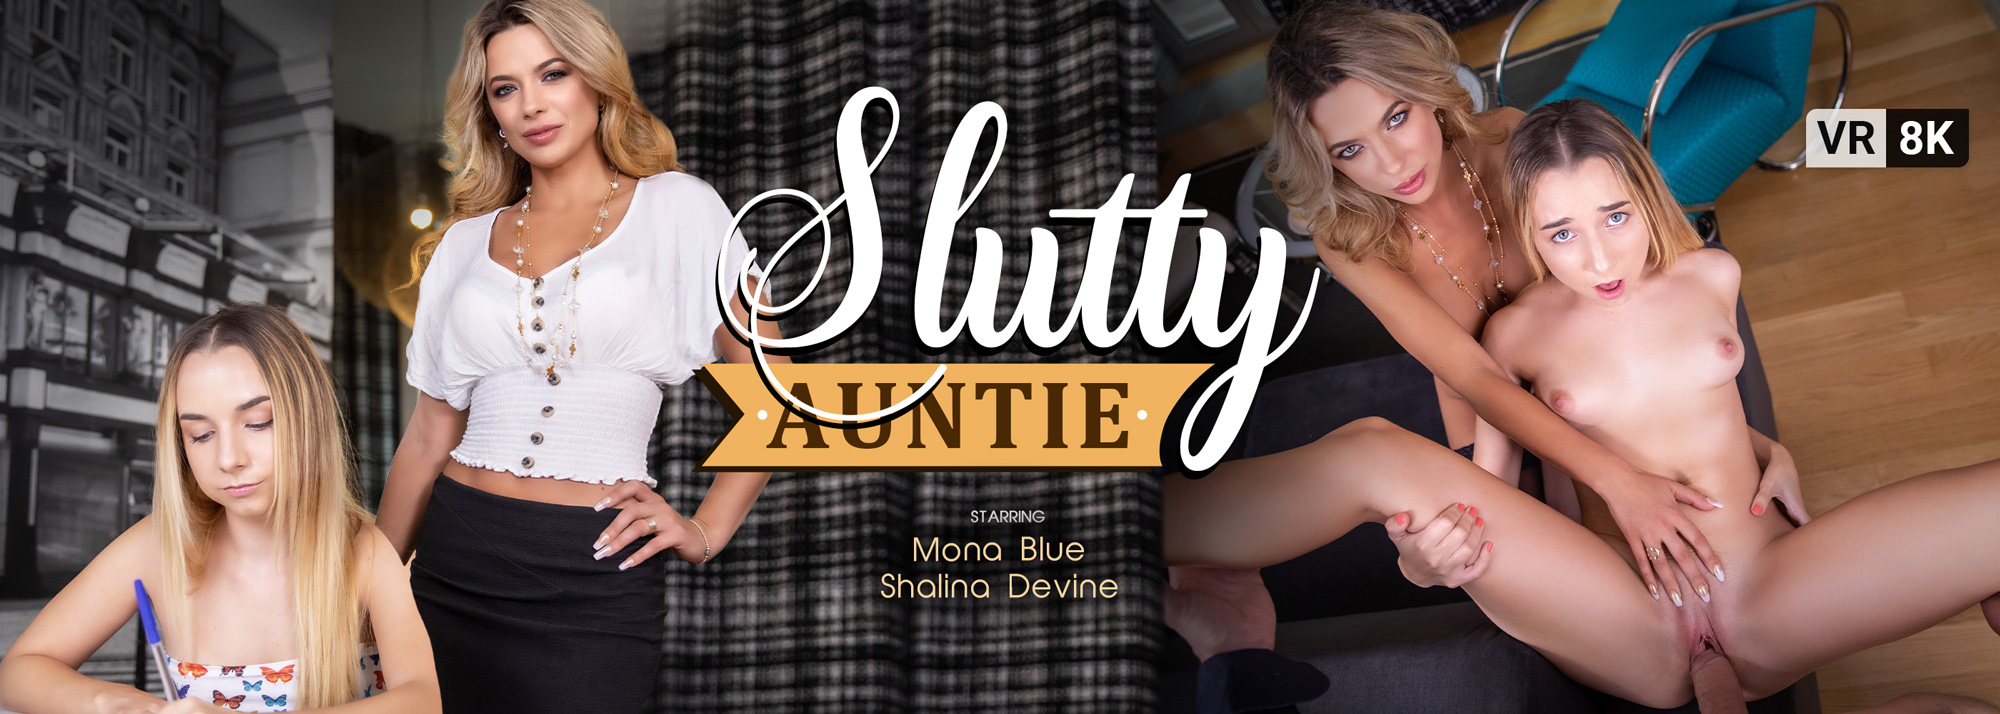 Slutty Auntie VR Porn Video: 8K, 4K, Full HD and 180/360 POV | VR Bangers